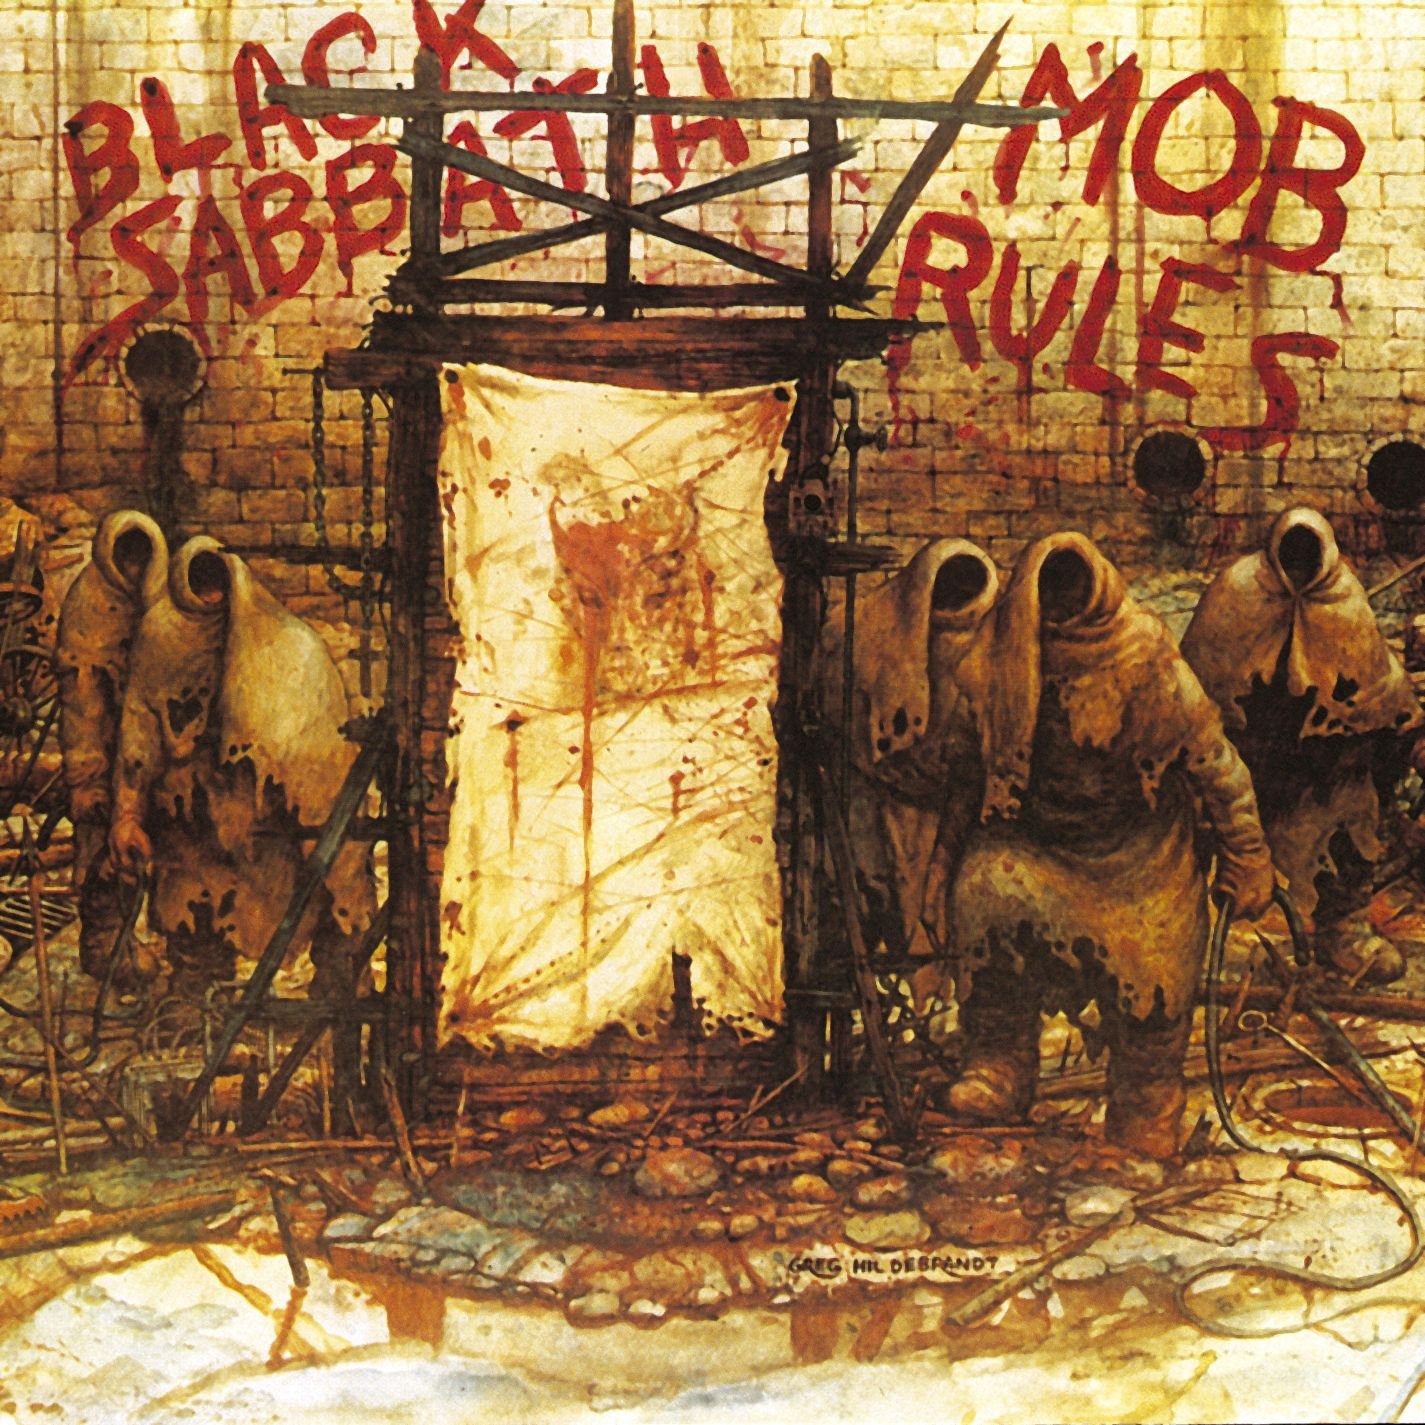 Album cover: Mob Rules by Black Sabbath